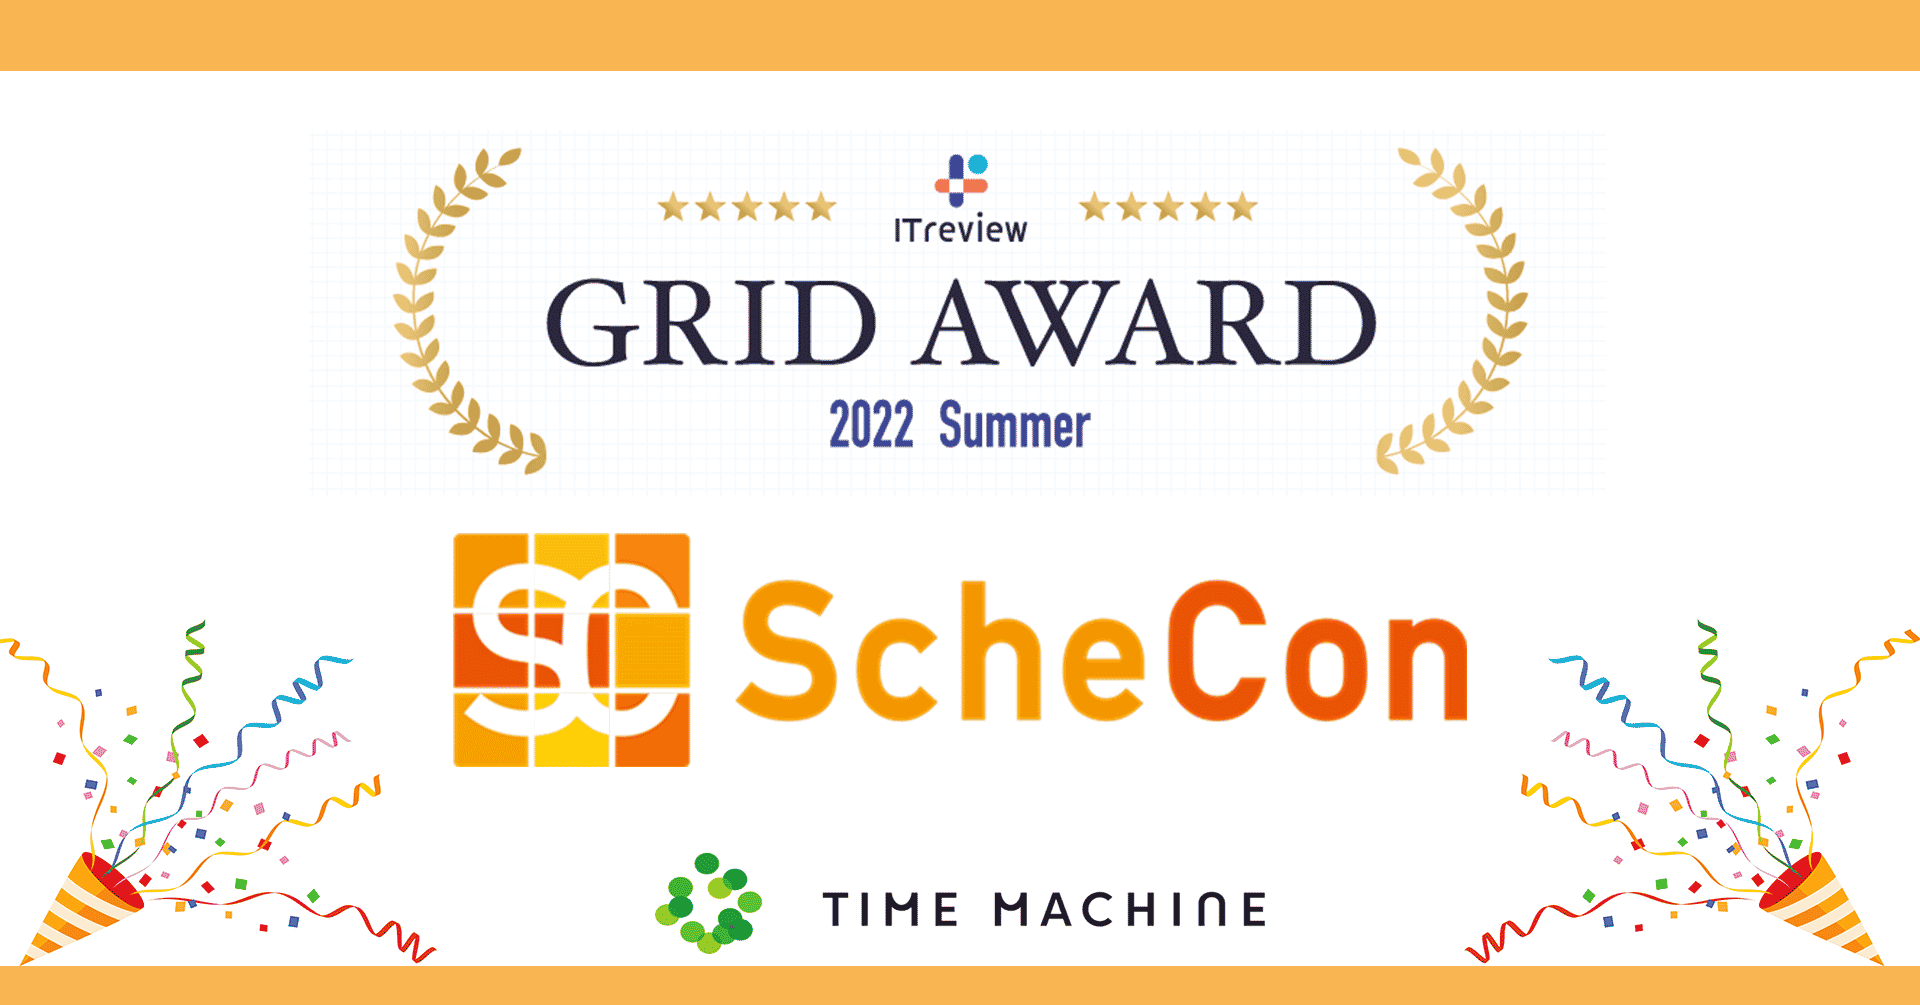 「Schecon」が 『ITreview Grid Award 2022 Summer』にて「Leader」を受賞しました！